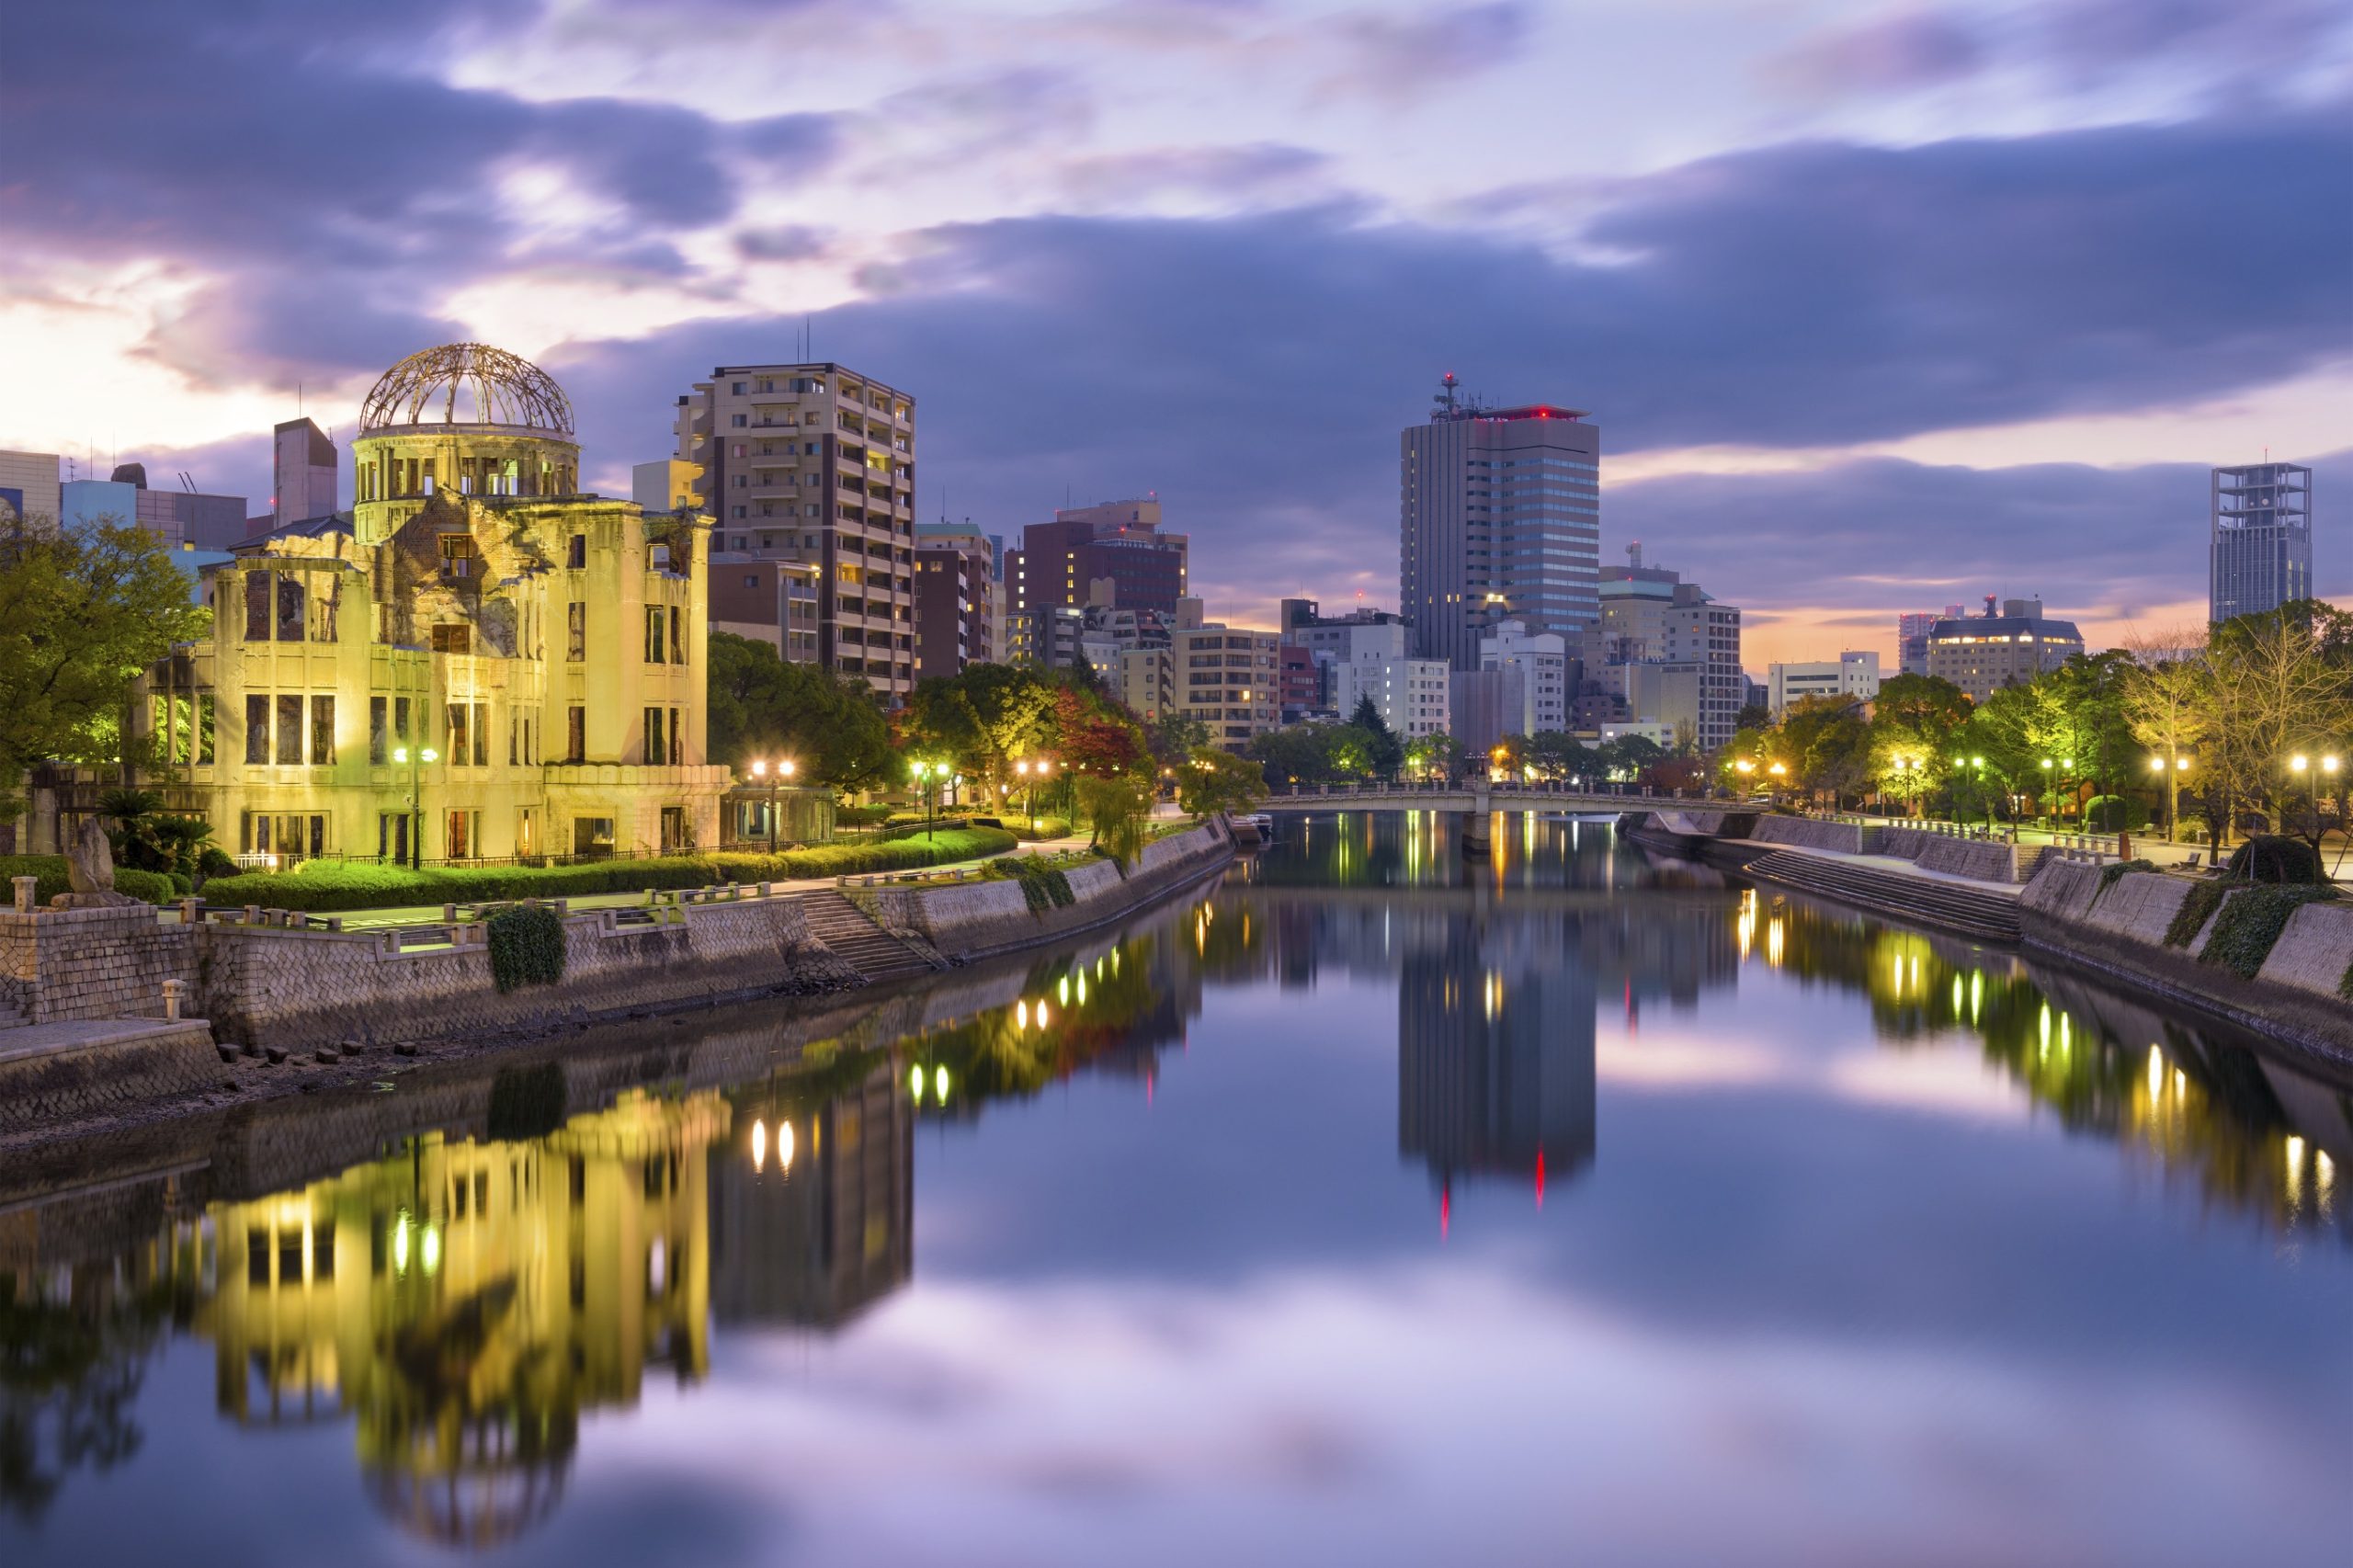 Get Hiroshima Your Ultimate Travel Guide to Hiroshima's Hidden Gems